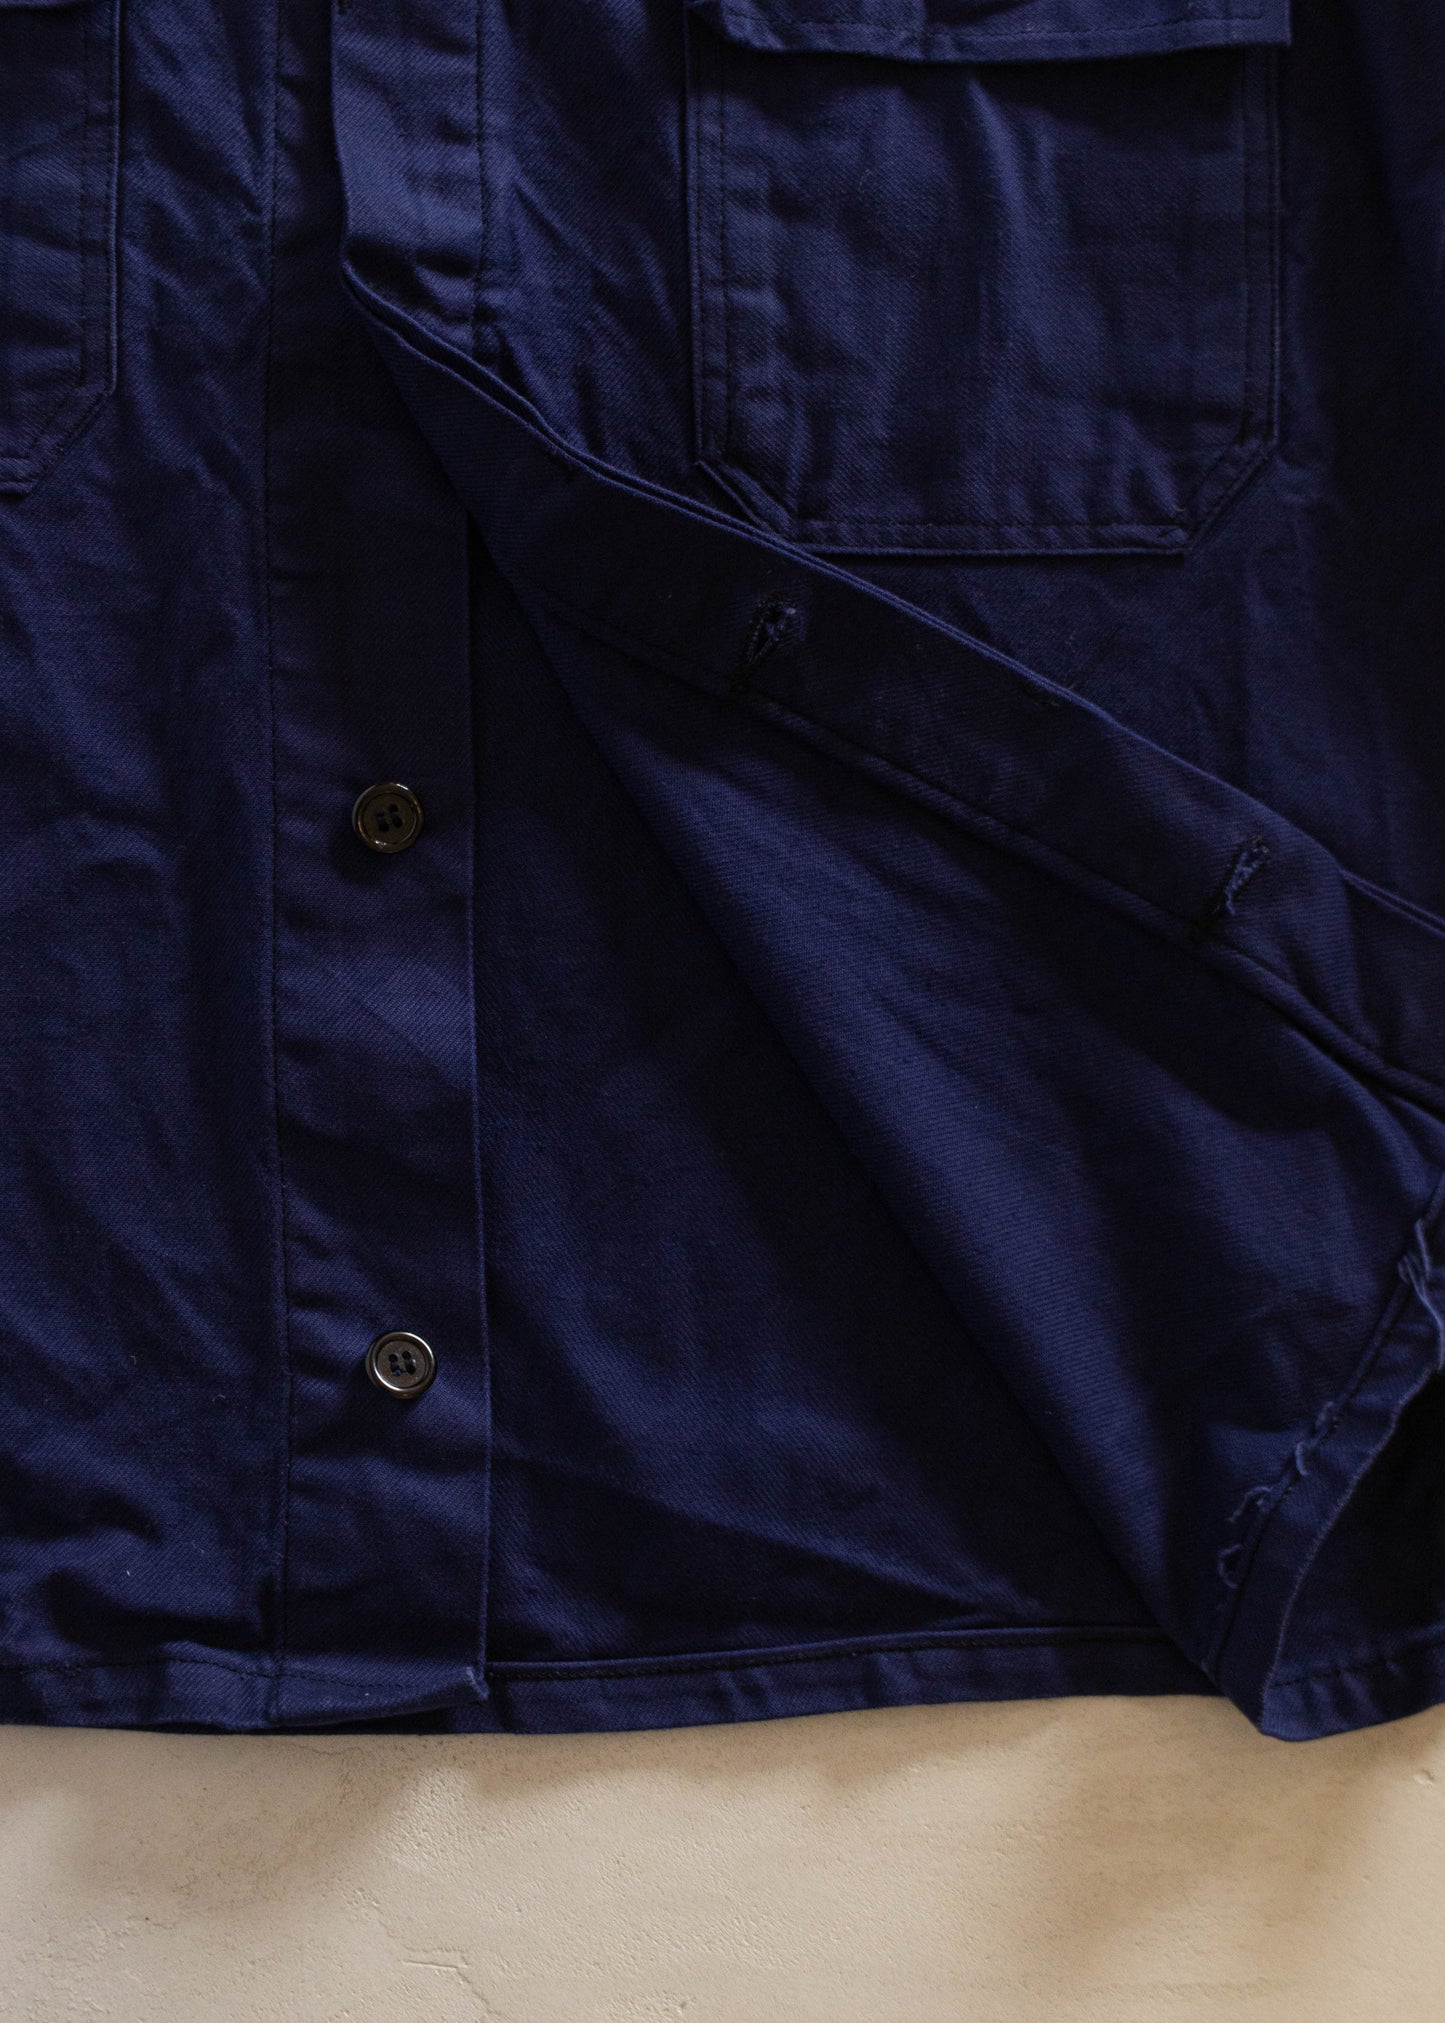 1980s European Workwear Button Up Chore Jacket Size S/M